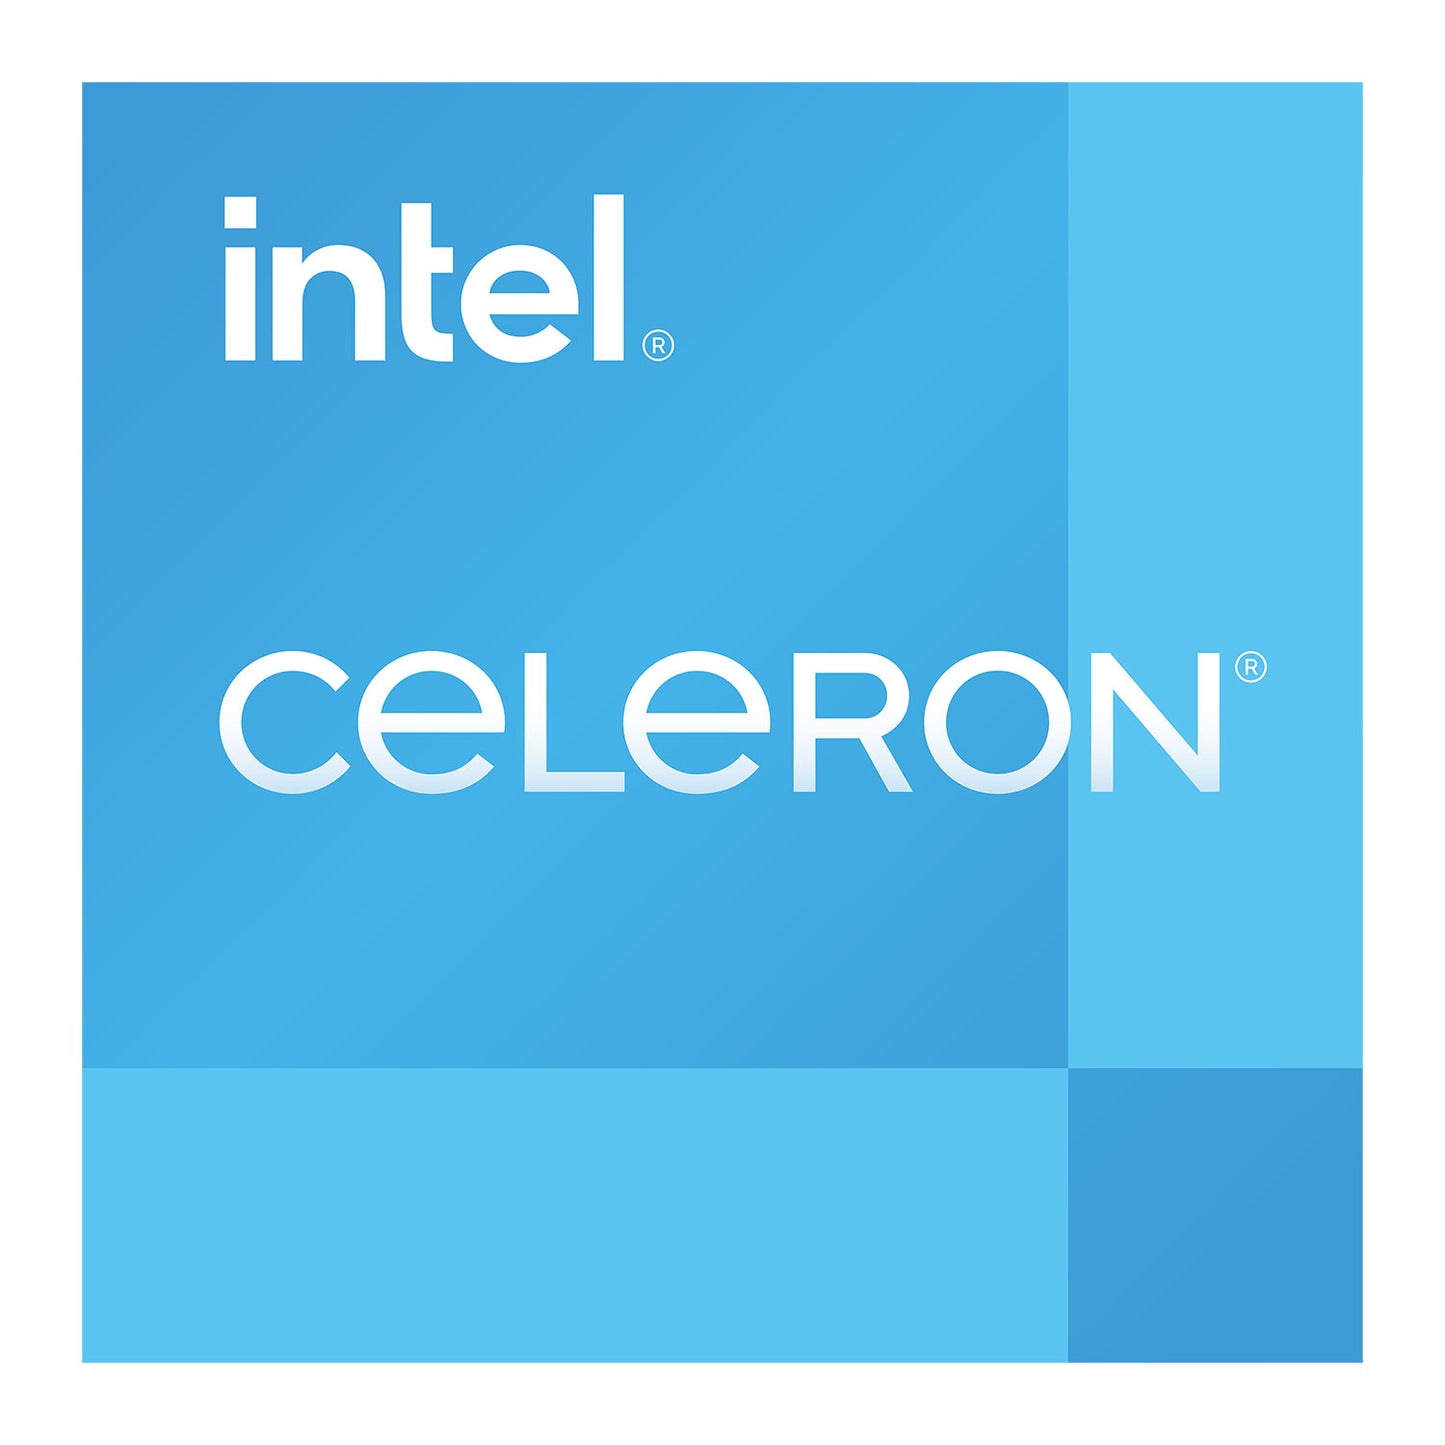 Intel Celeron G6900 2 Core Alder Lake PC CPU / Processor 3.4GHz, 4MB Cache, 46W